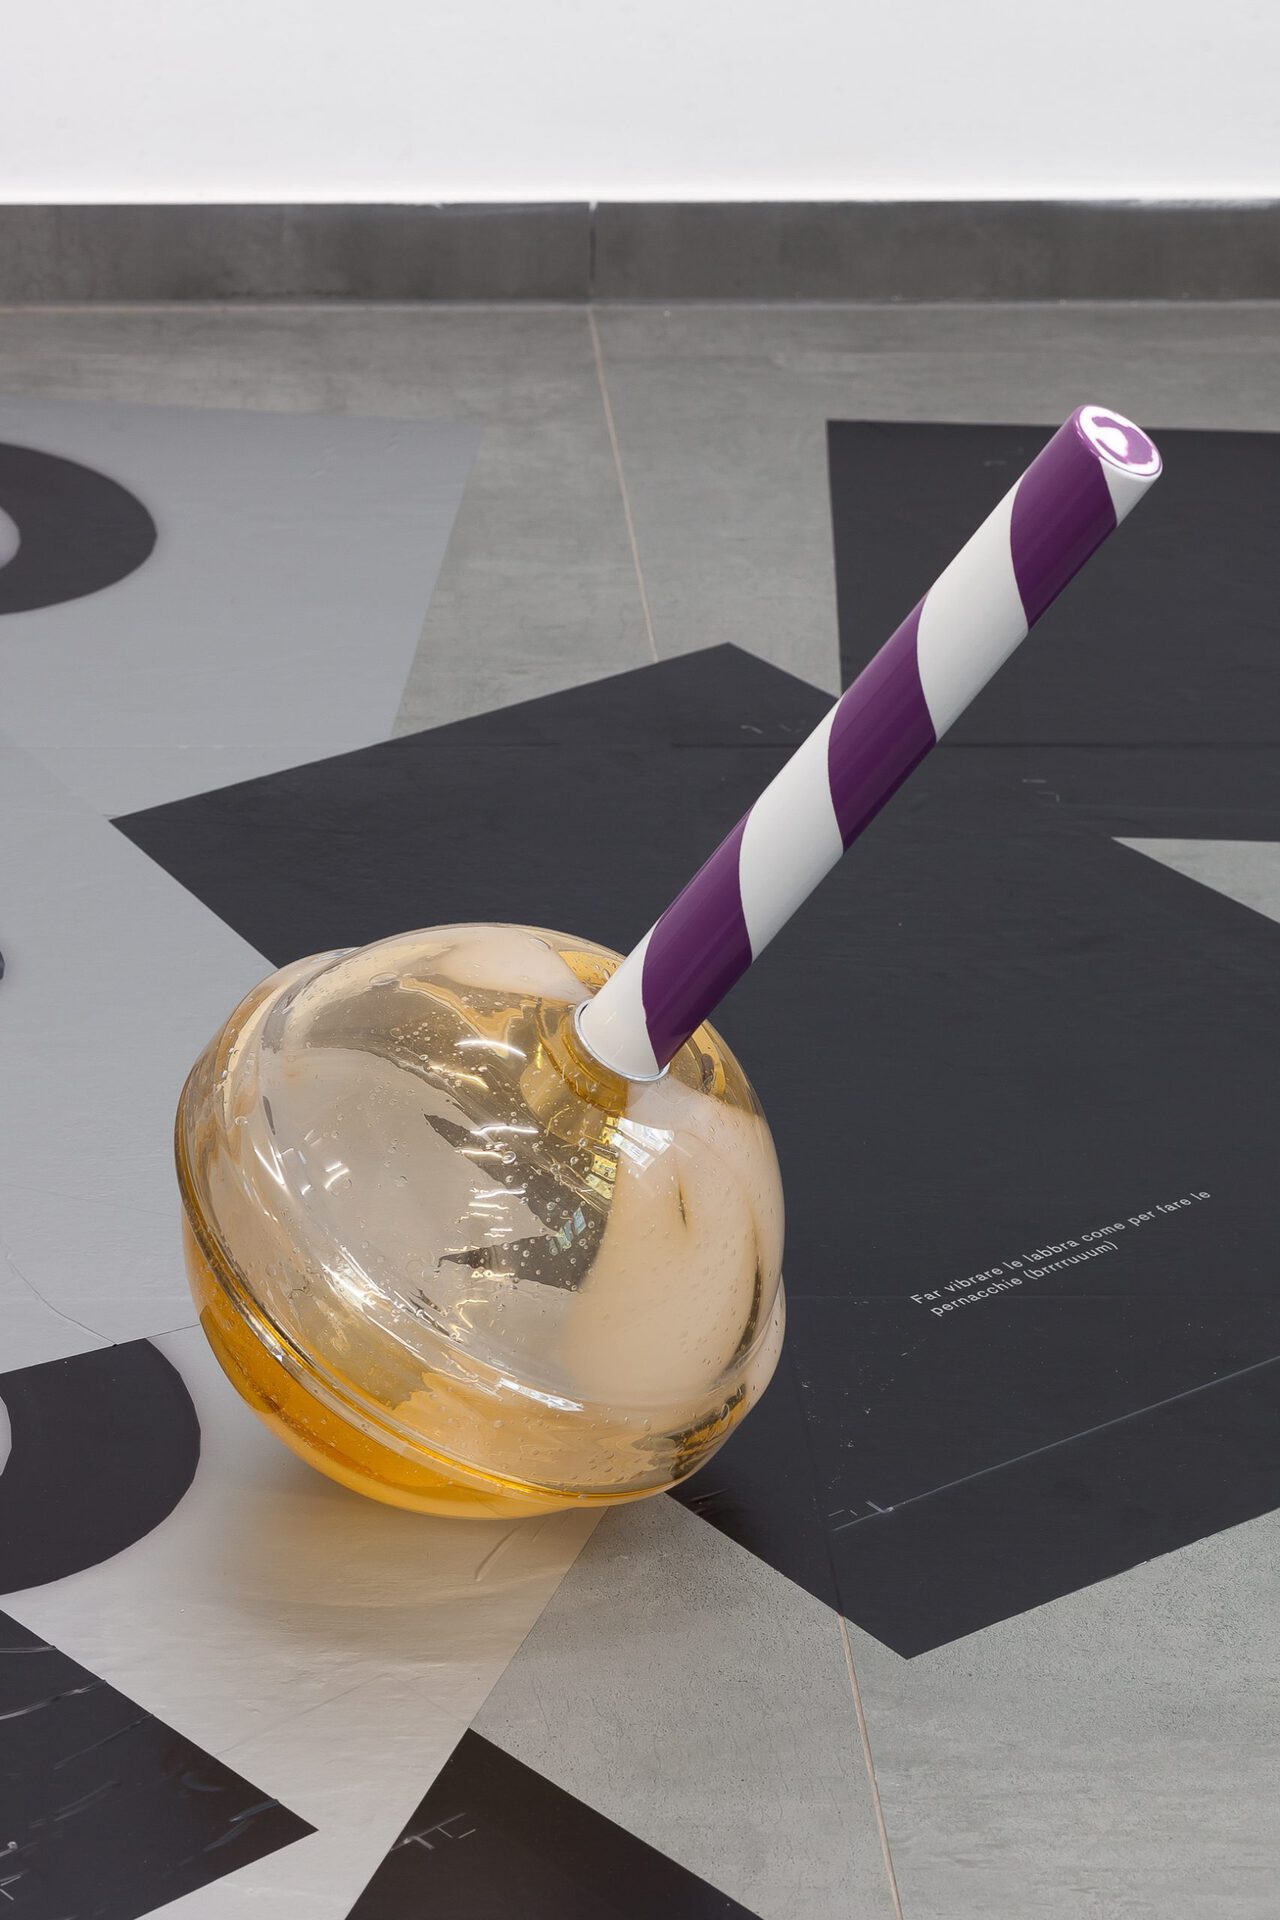 Thomas Liu Le Lann, Training Part 2: SOCATA?!, 2021, Cane blown glass, wood, lacquer, metal, Unique, 53 x 36 x 28 cm